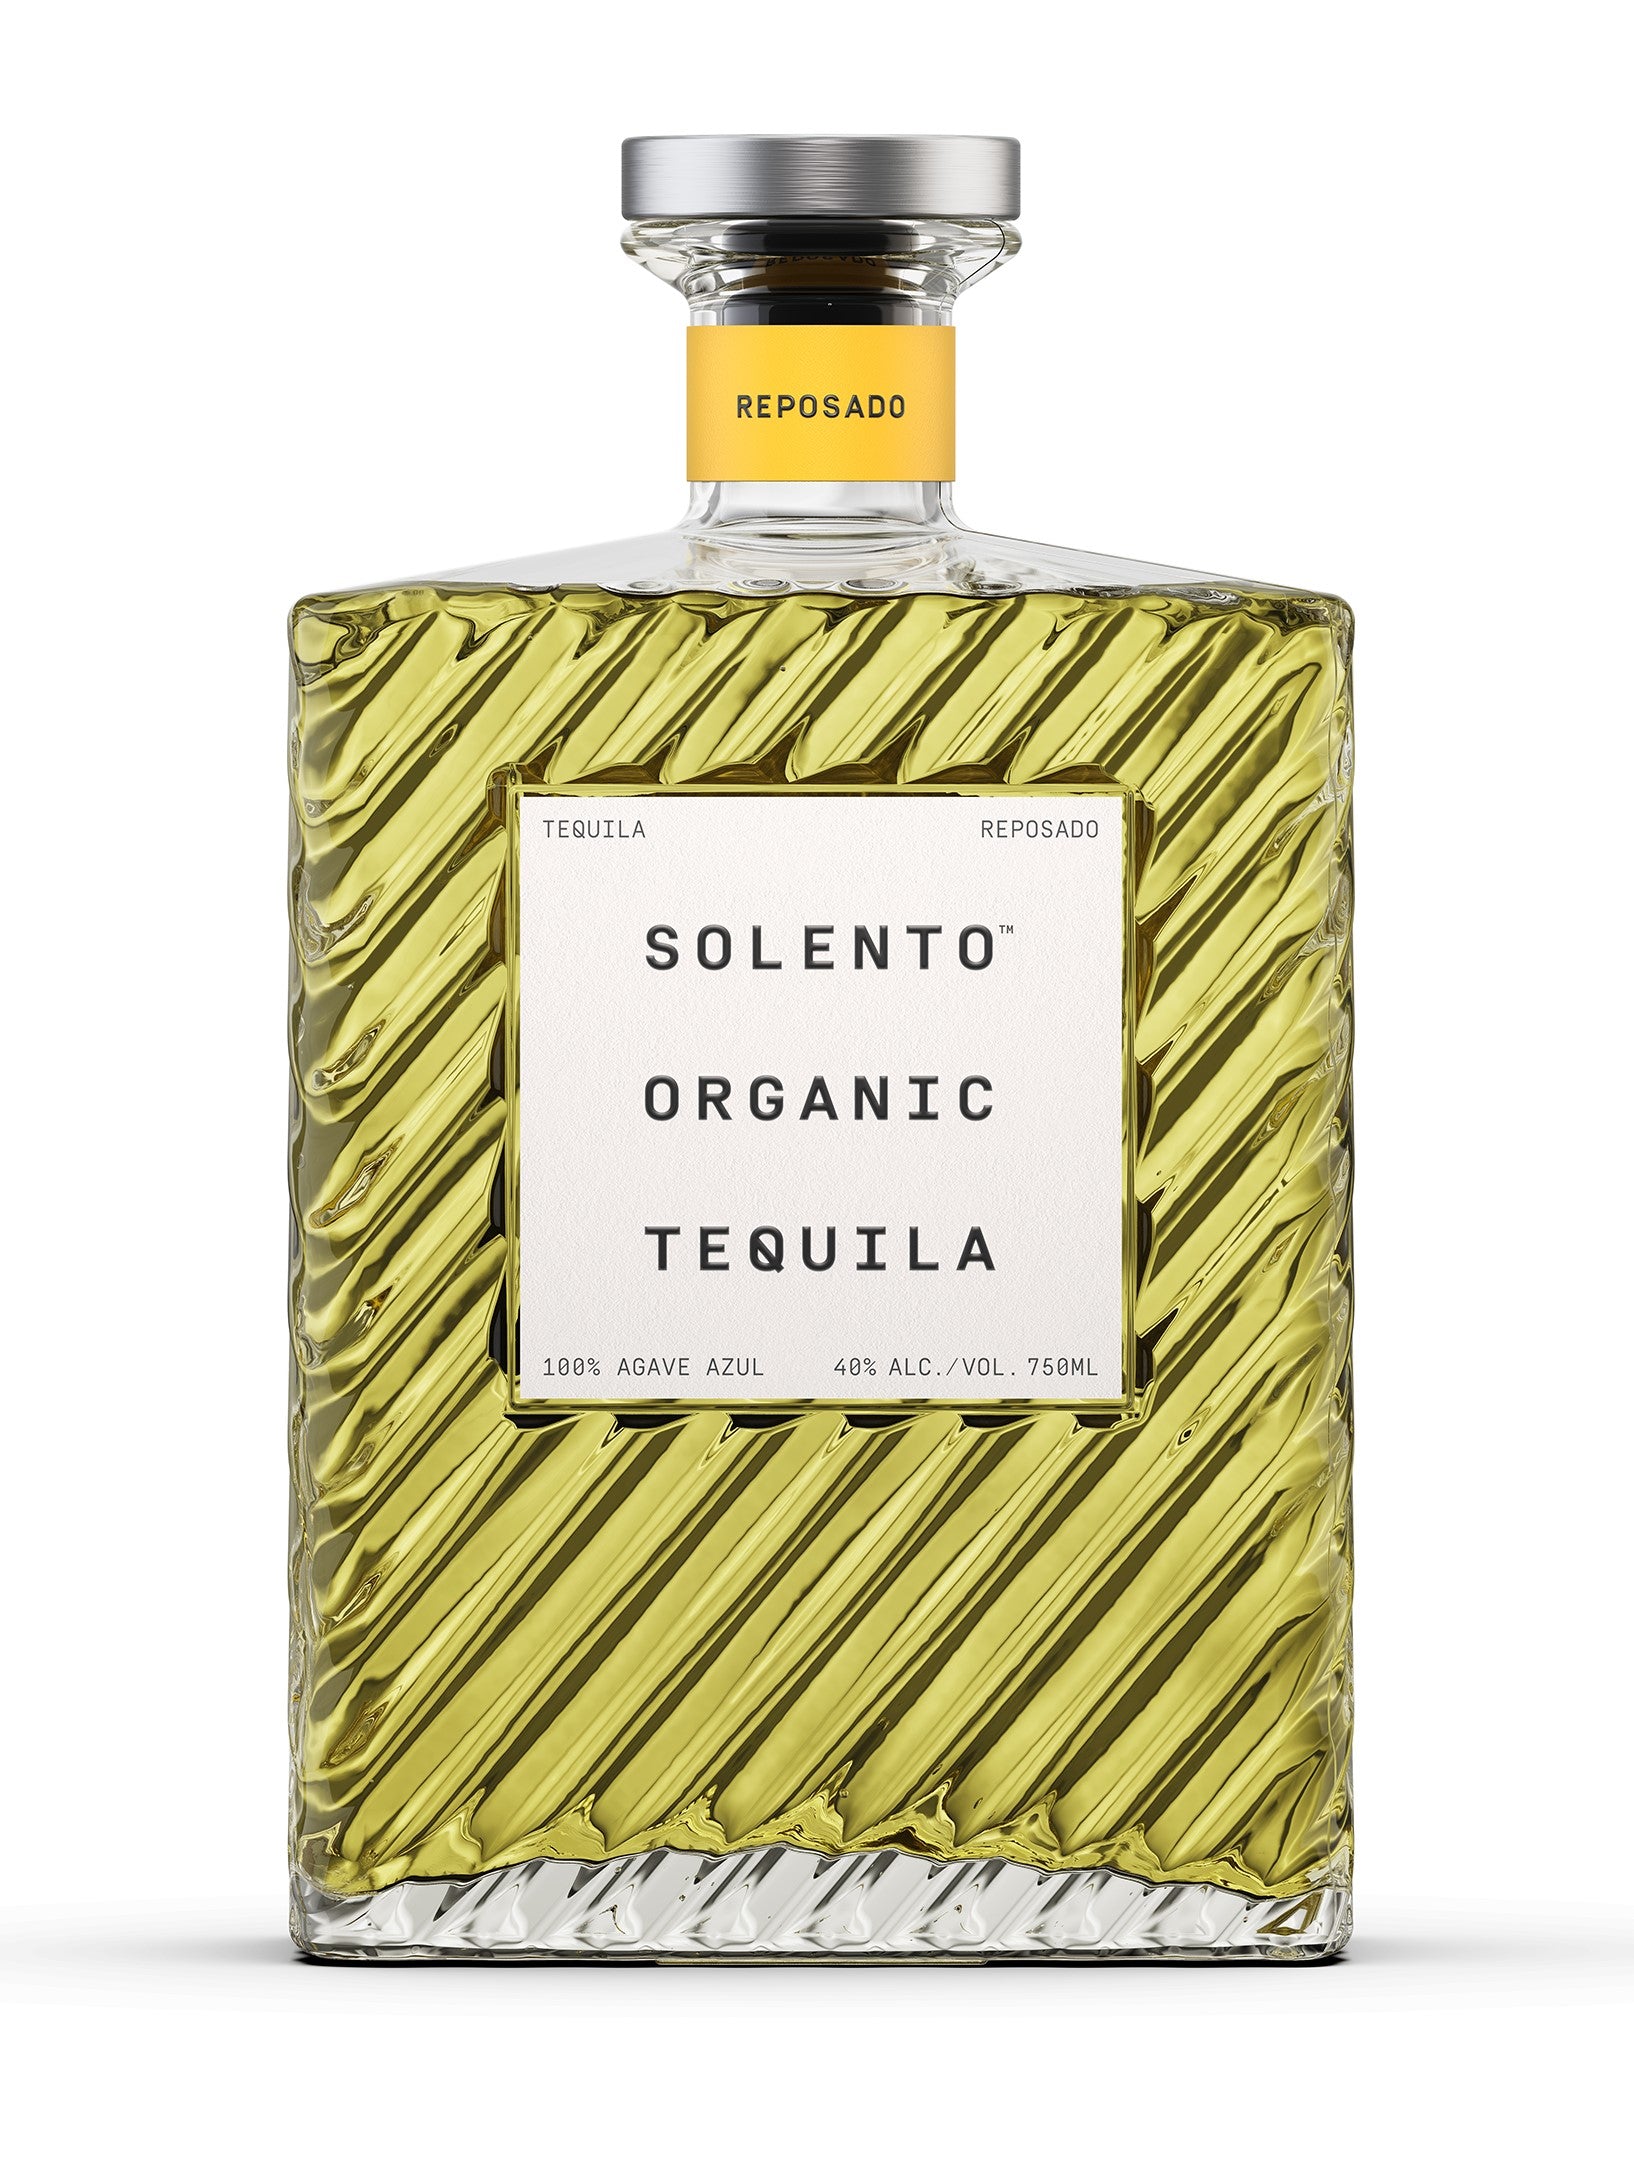 Solento, Organic Reposado Tequila, 80 Proof